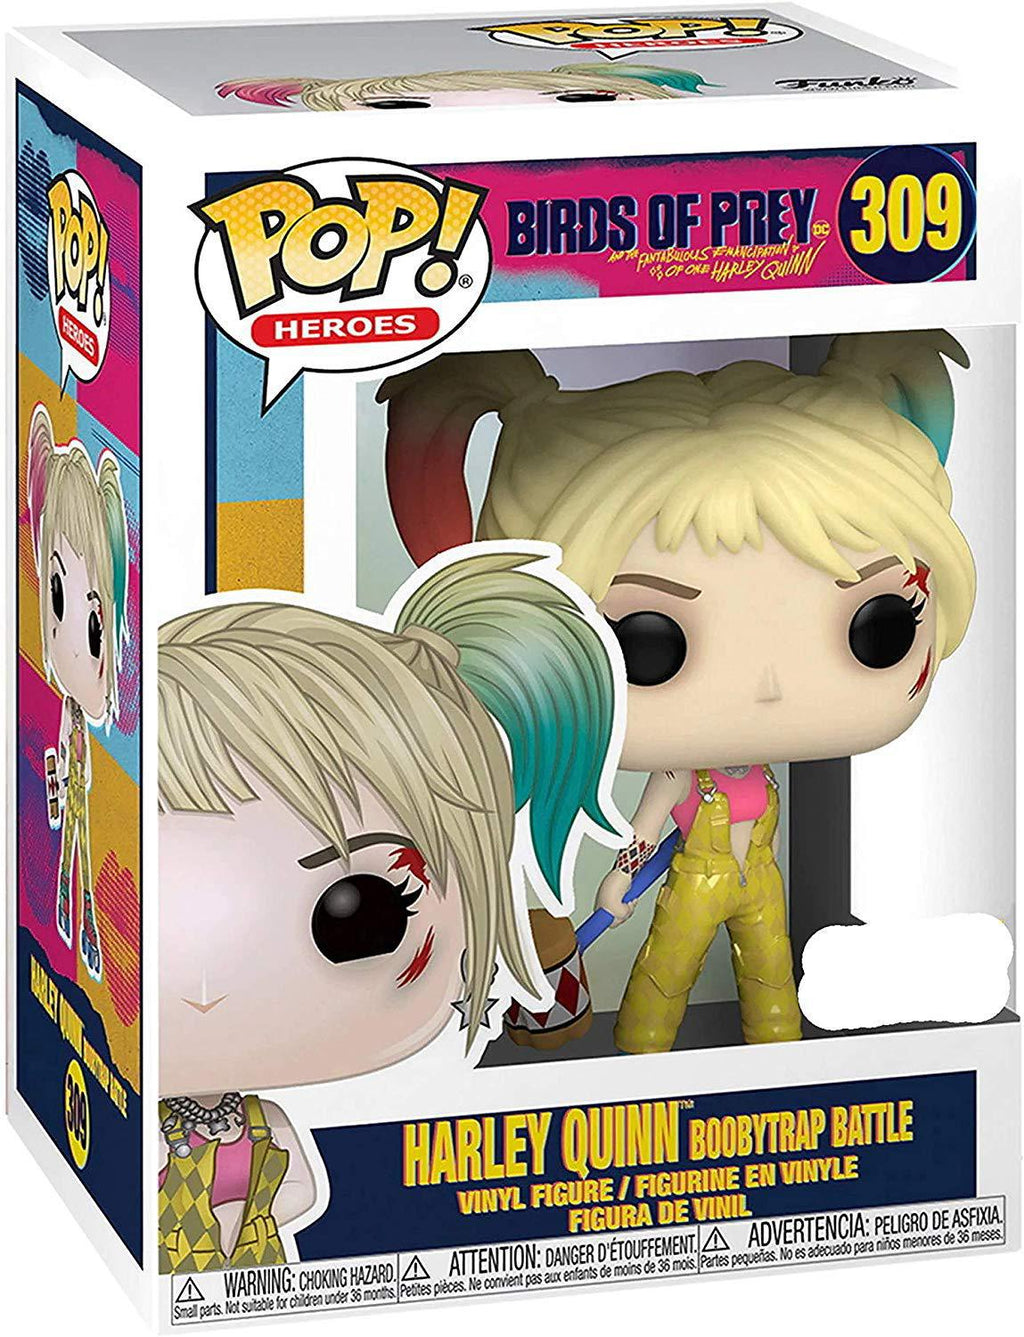 Pop Birds of Prey Harley Quinn Boobytrap Battle Vinyl Figure Hot Topic Exclusive